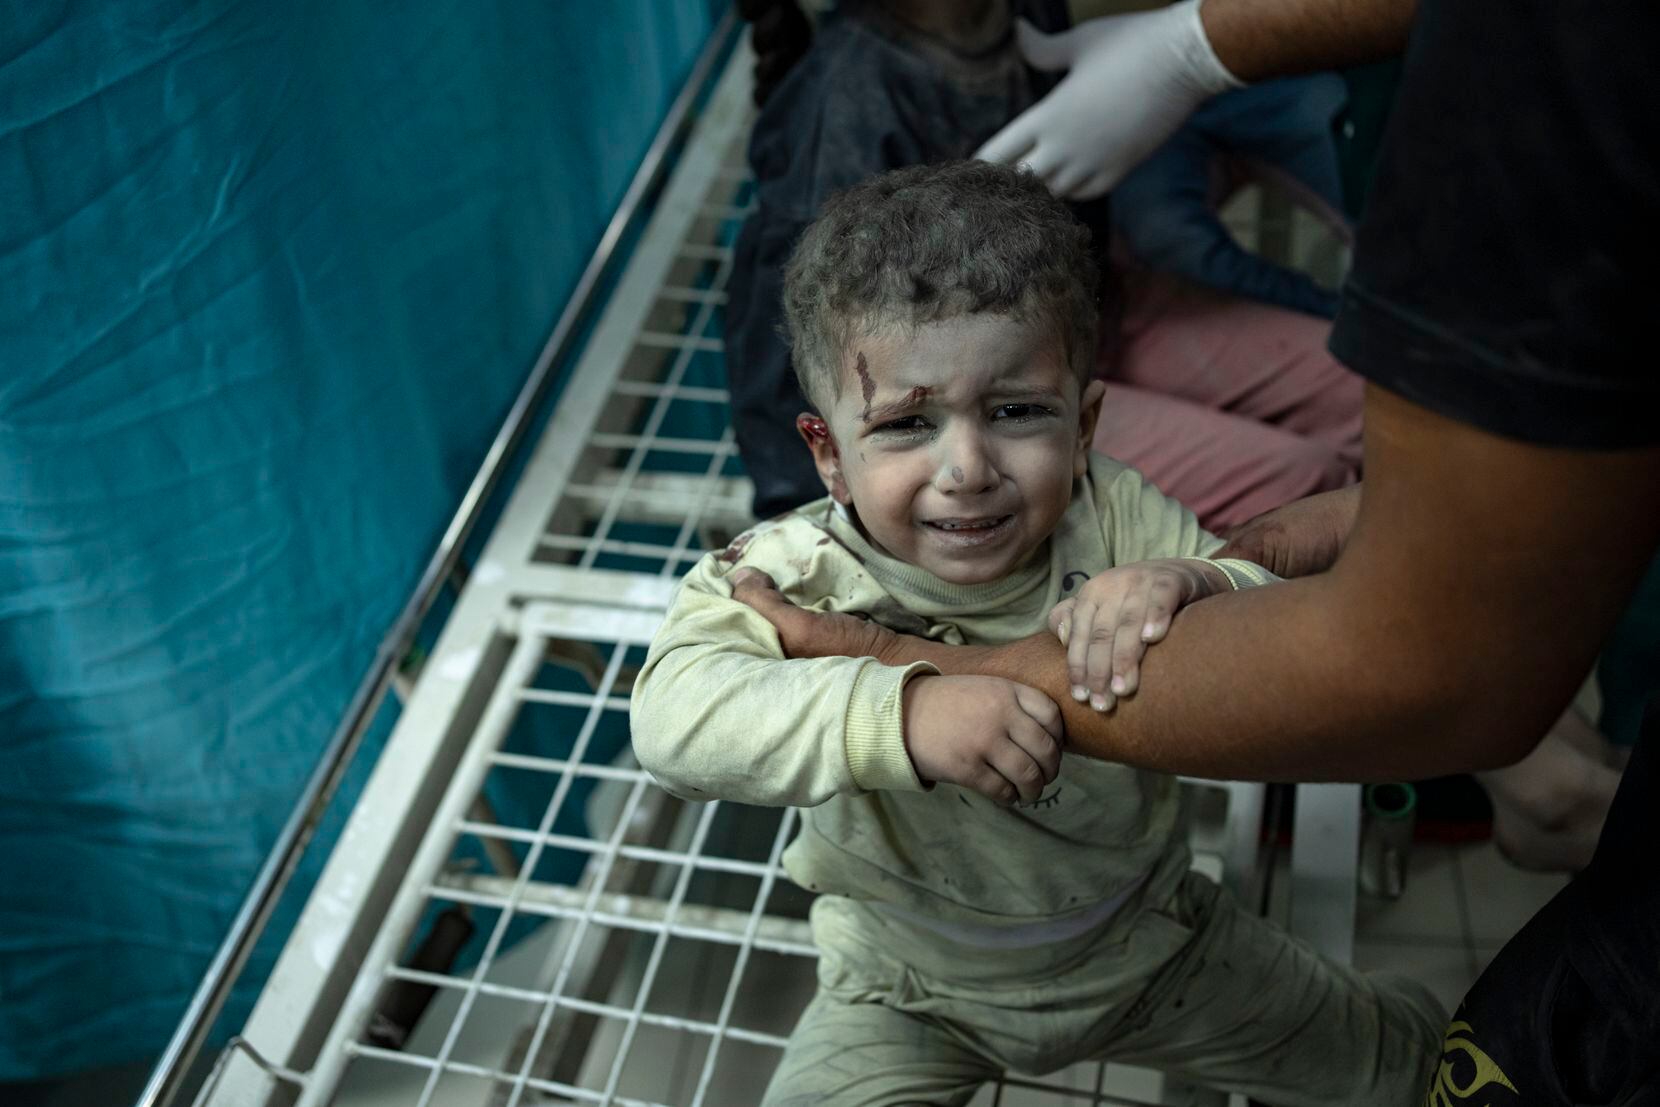 Gaza's Al Shifa 'not functioning as a hospital anymore', says WHO